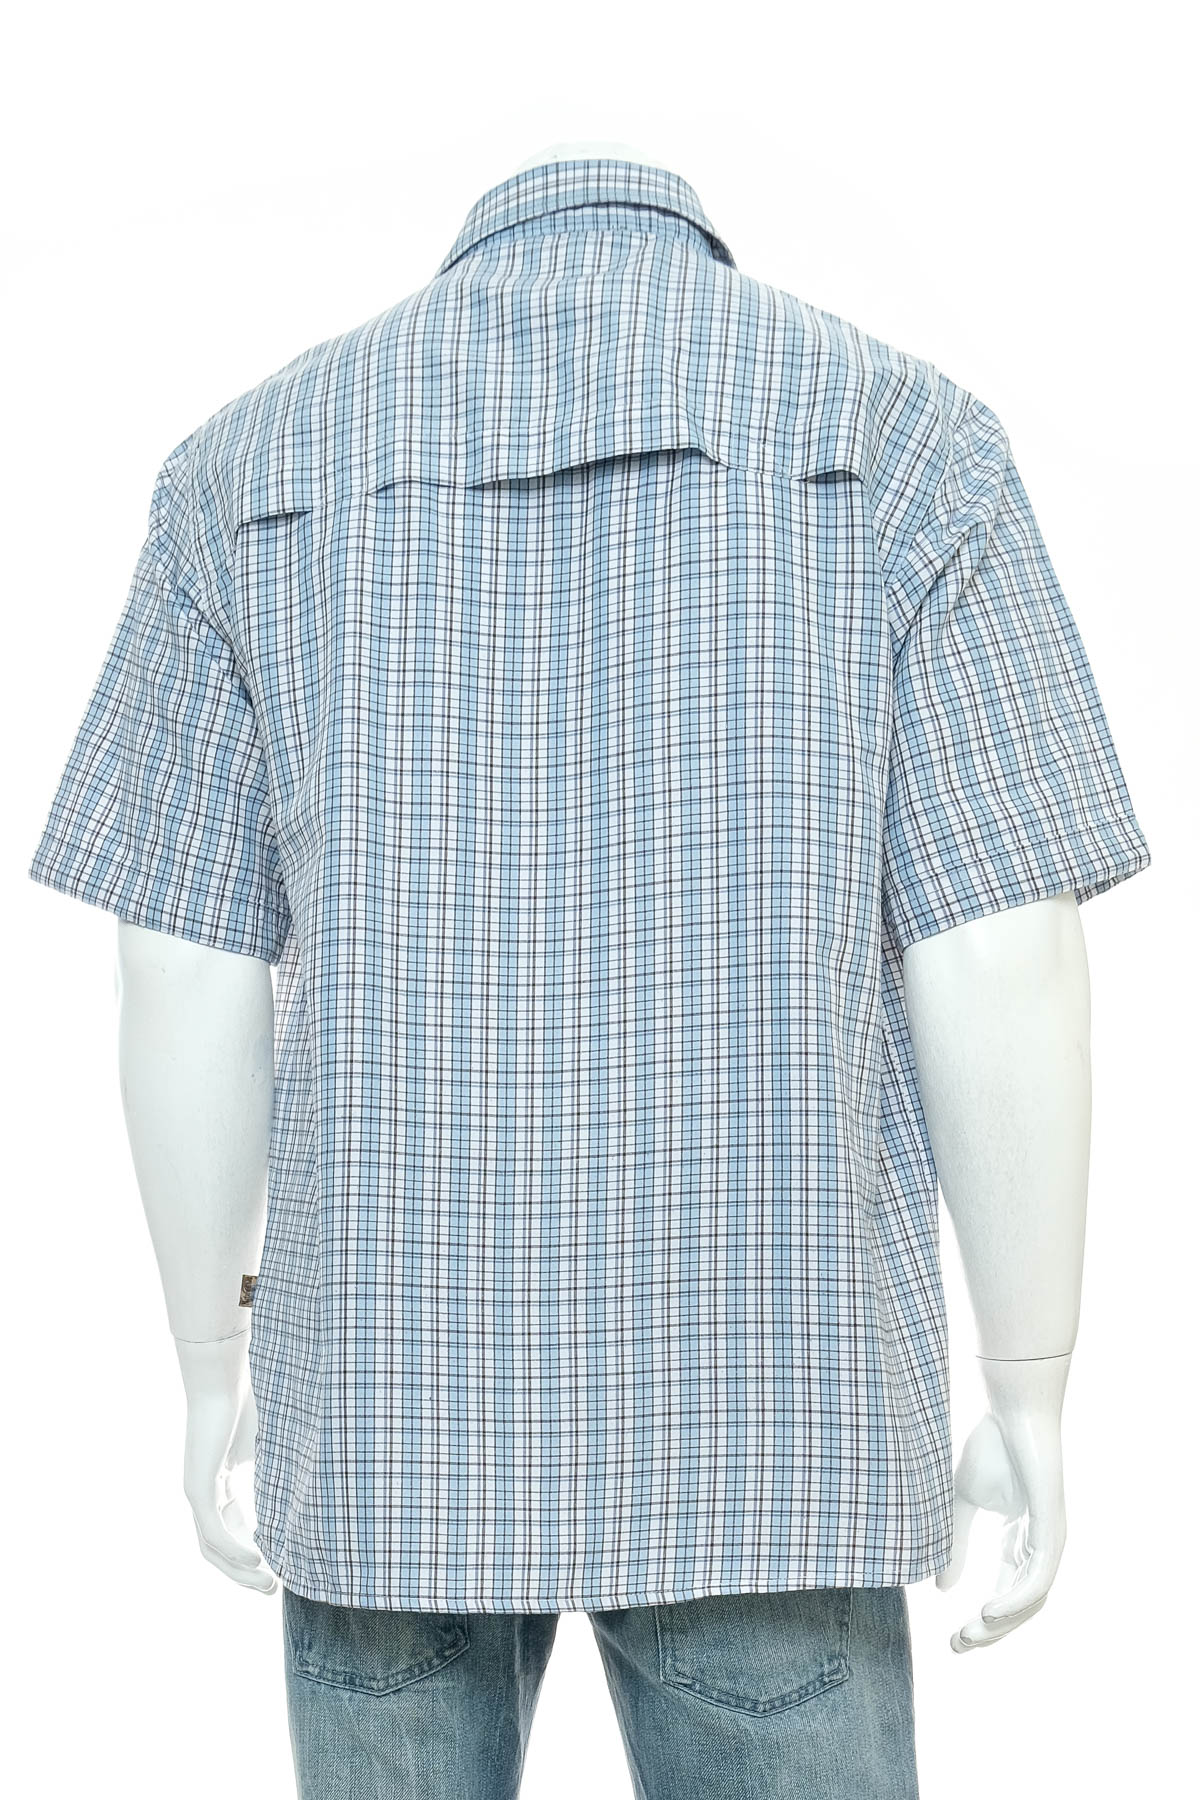 Men's shirt - TCM - 1